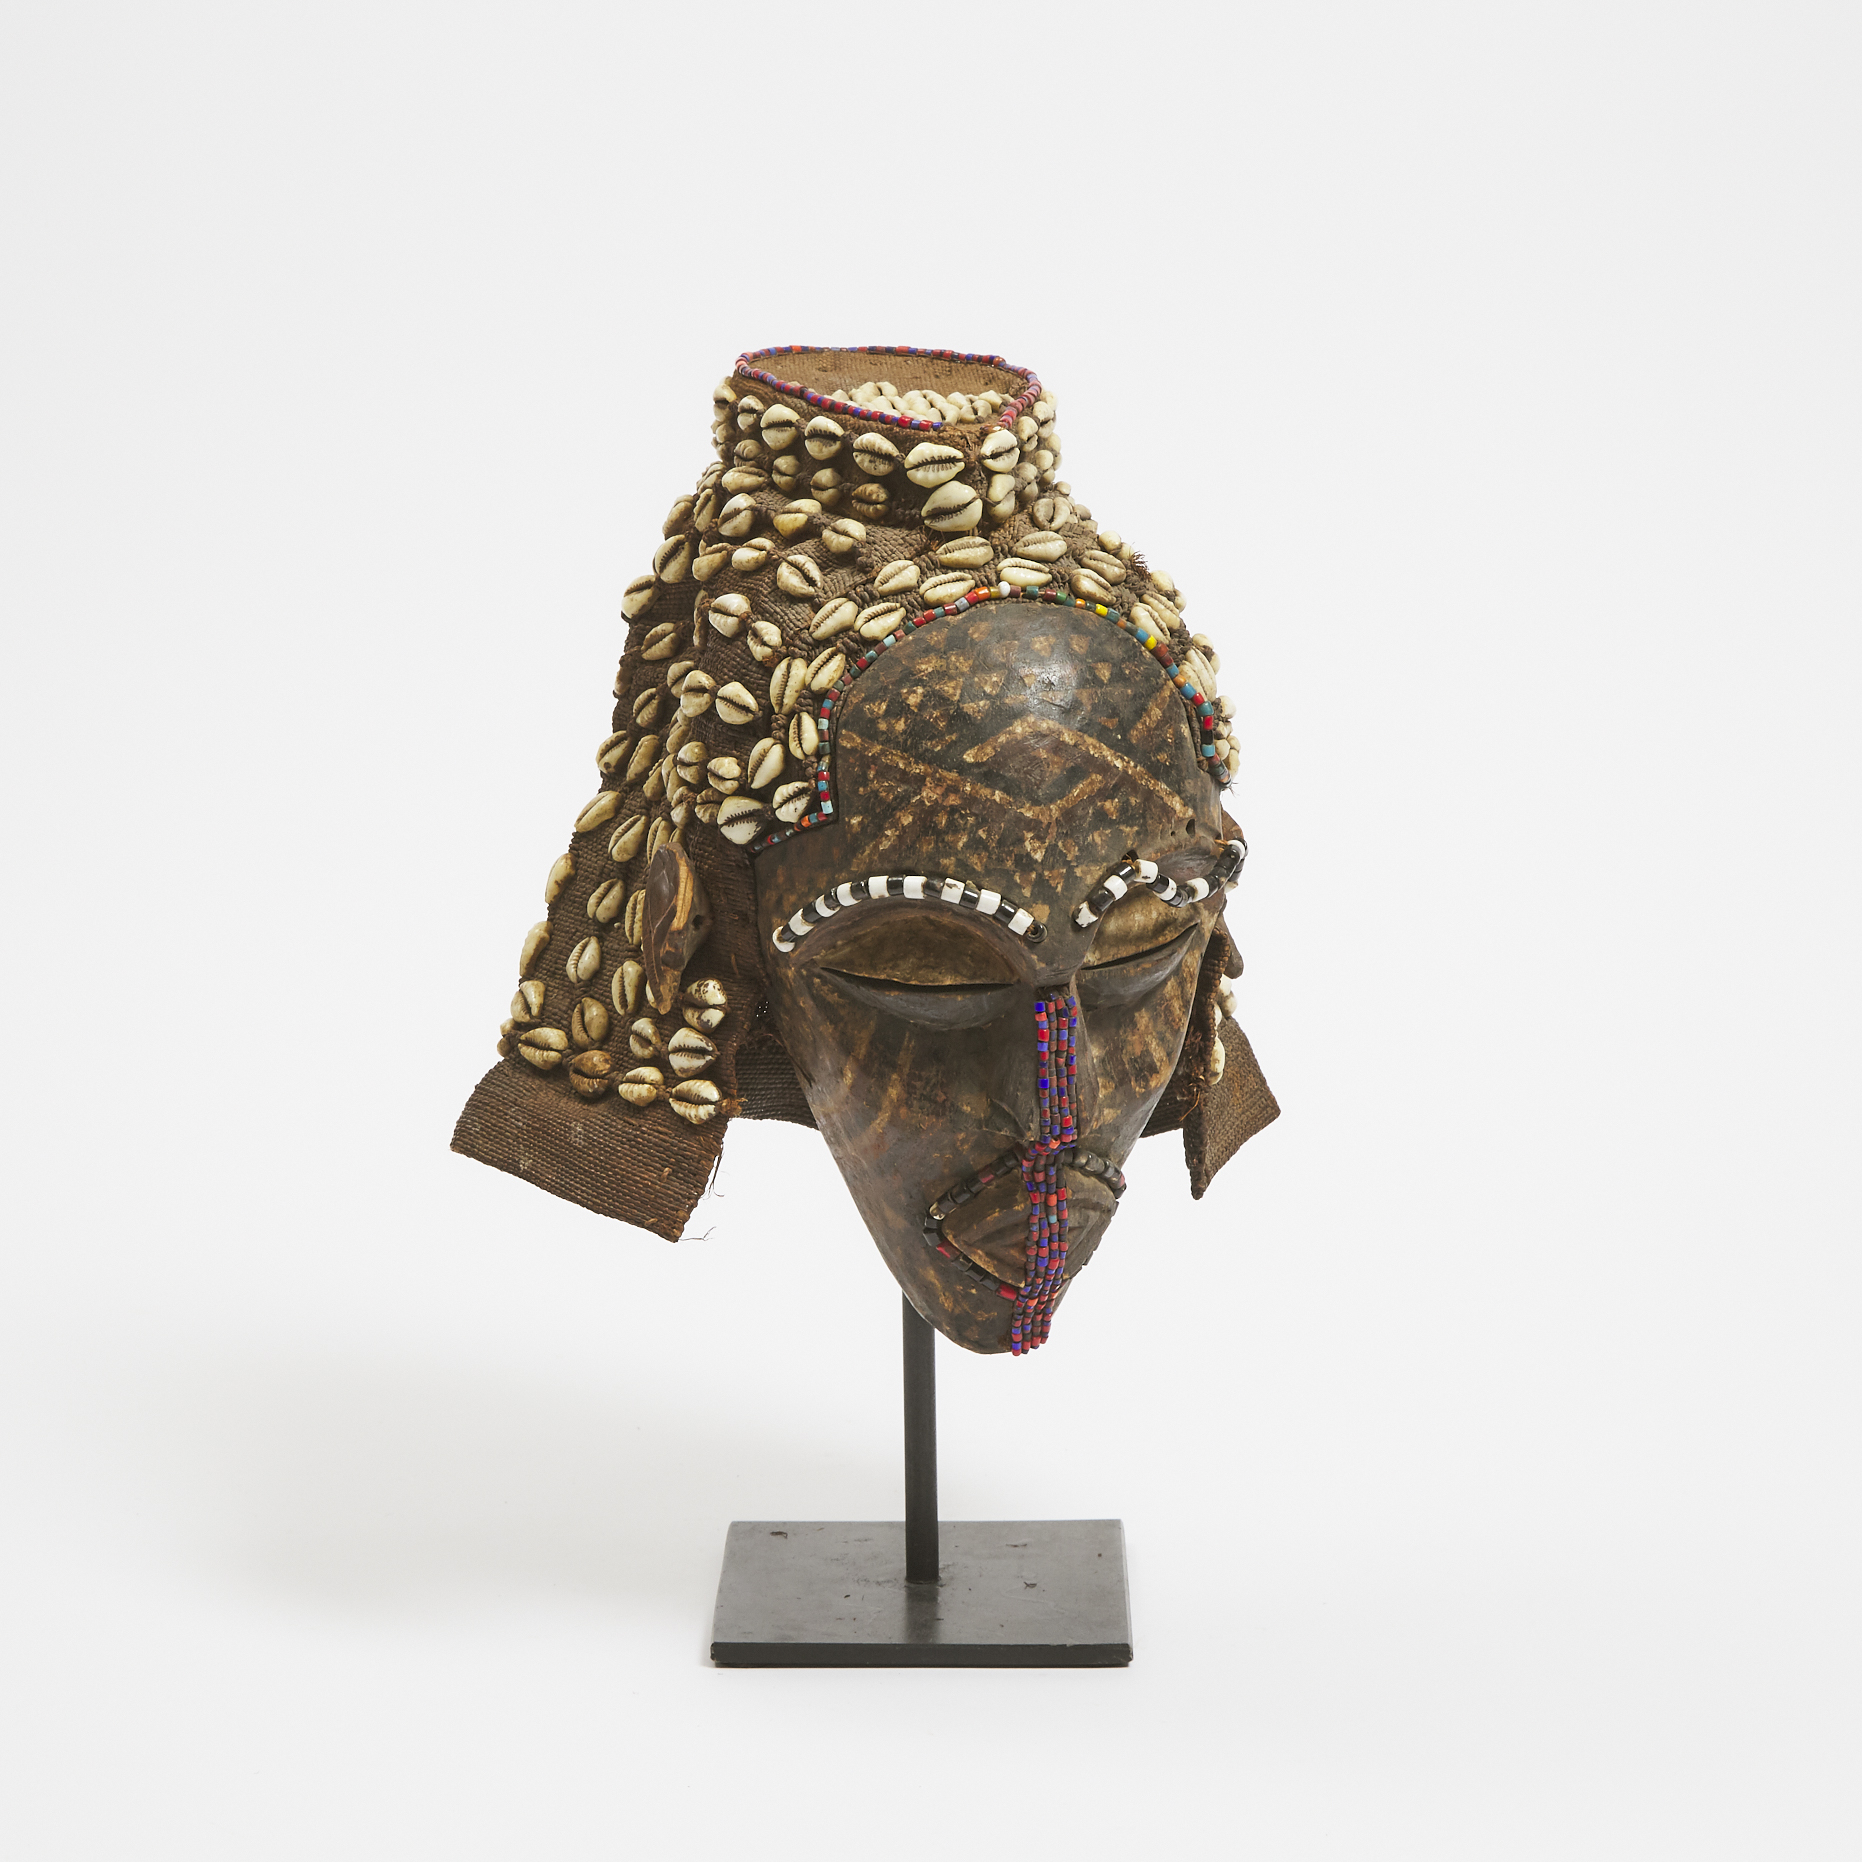 Kuba Ngady Amwaash Mask, Democratic Republic of Congo, Central Africa, mid 20th century